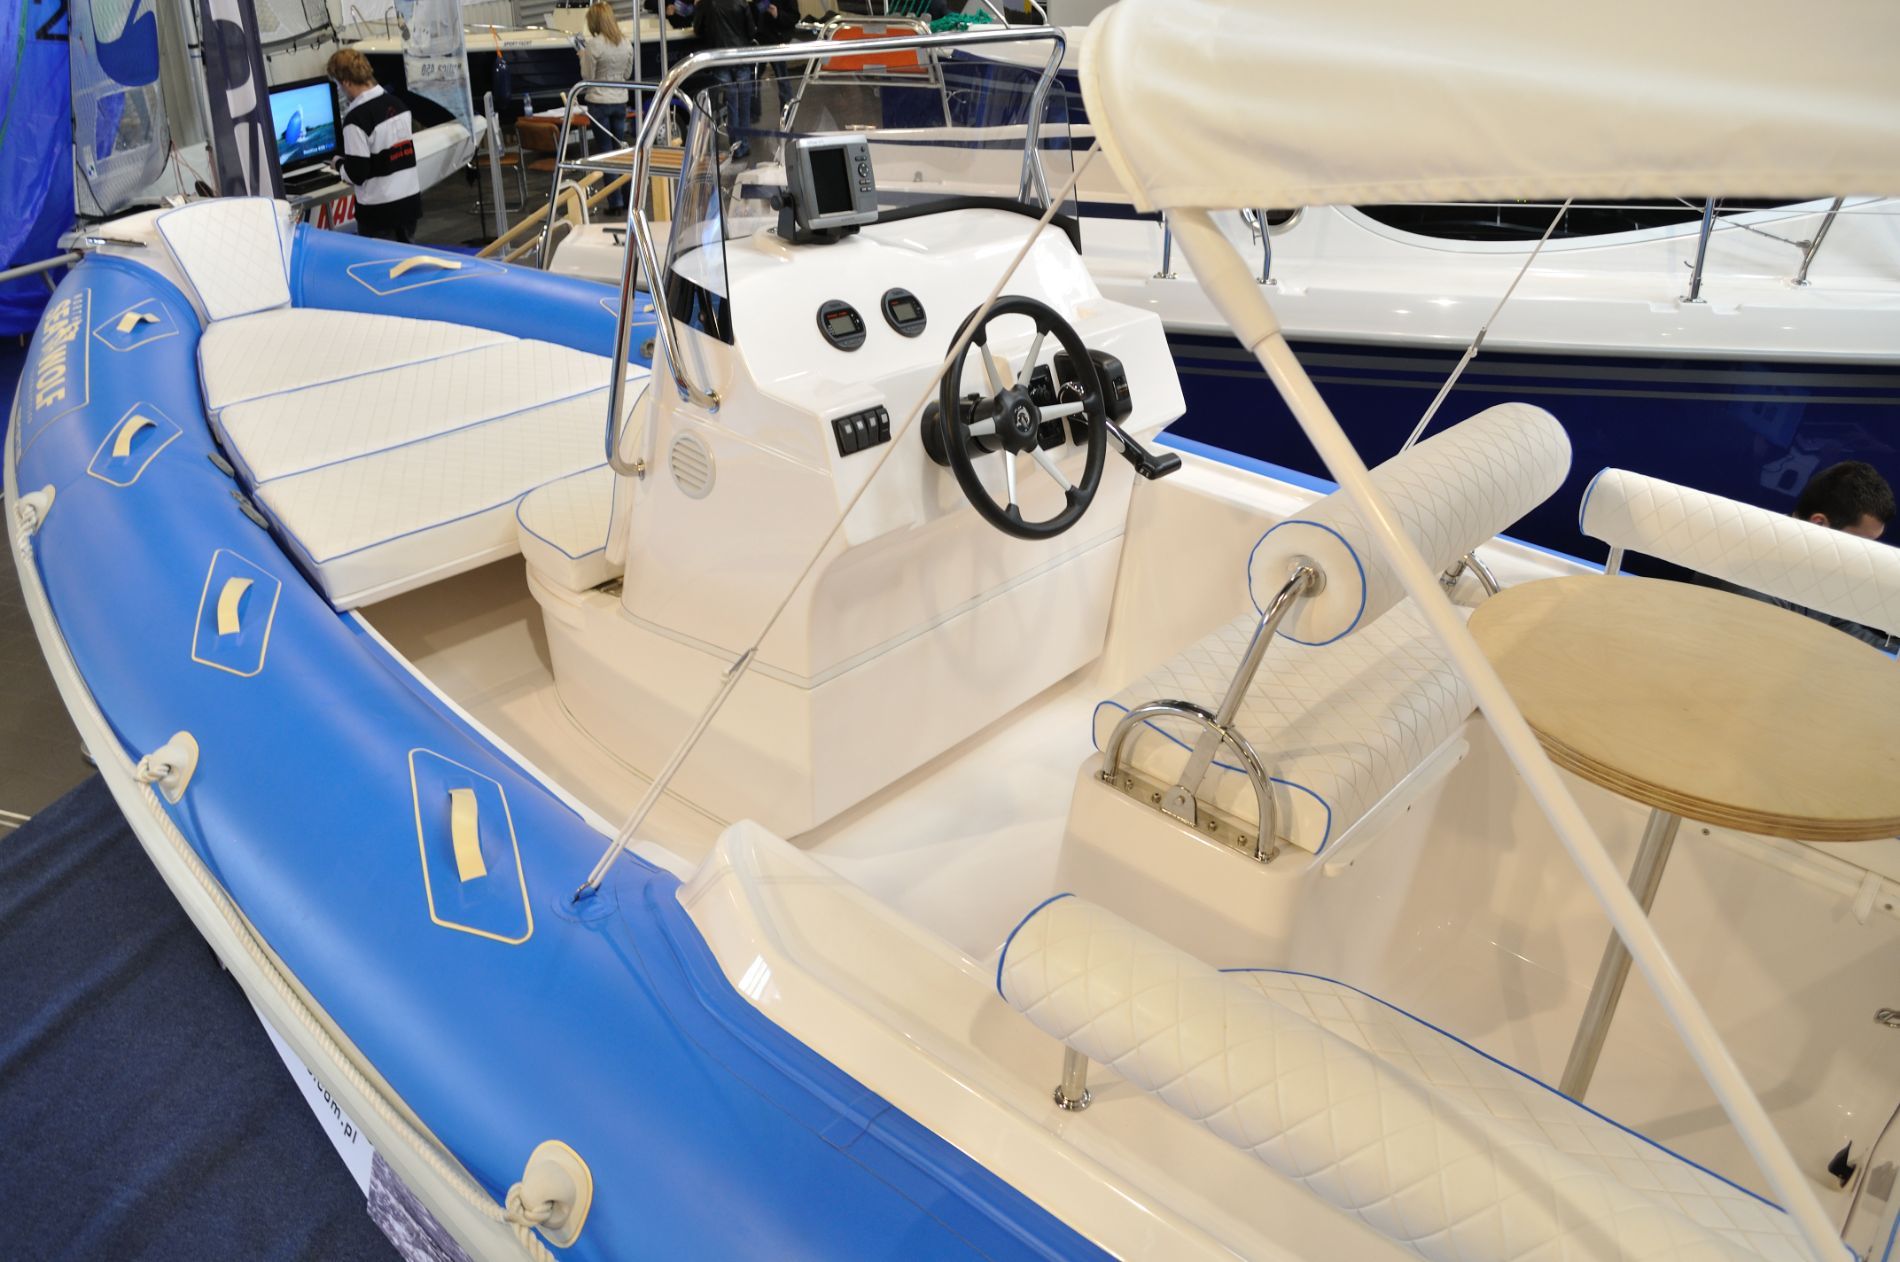 Boat interior blue craft